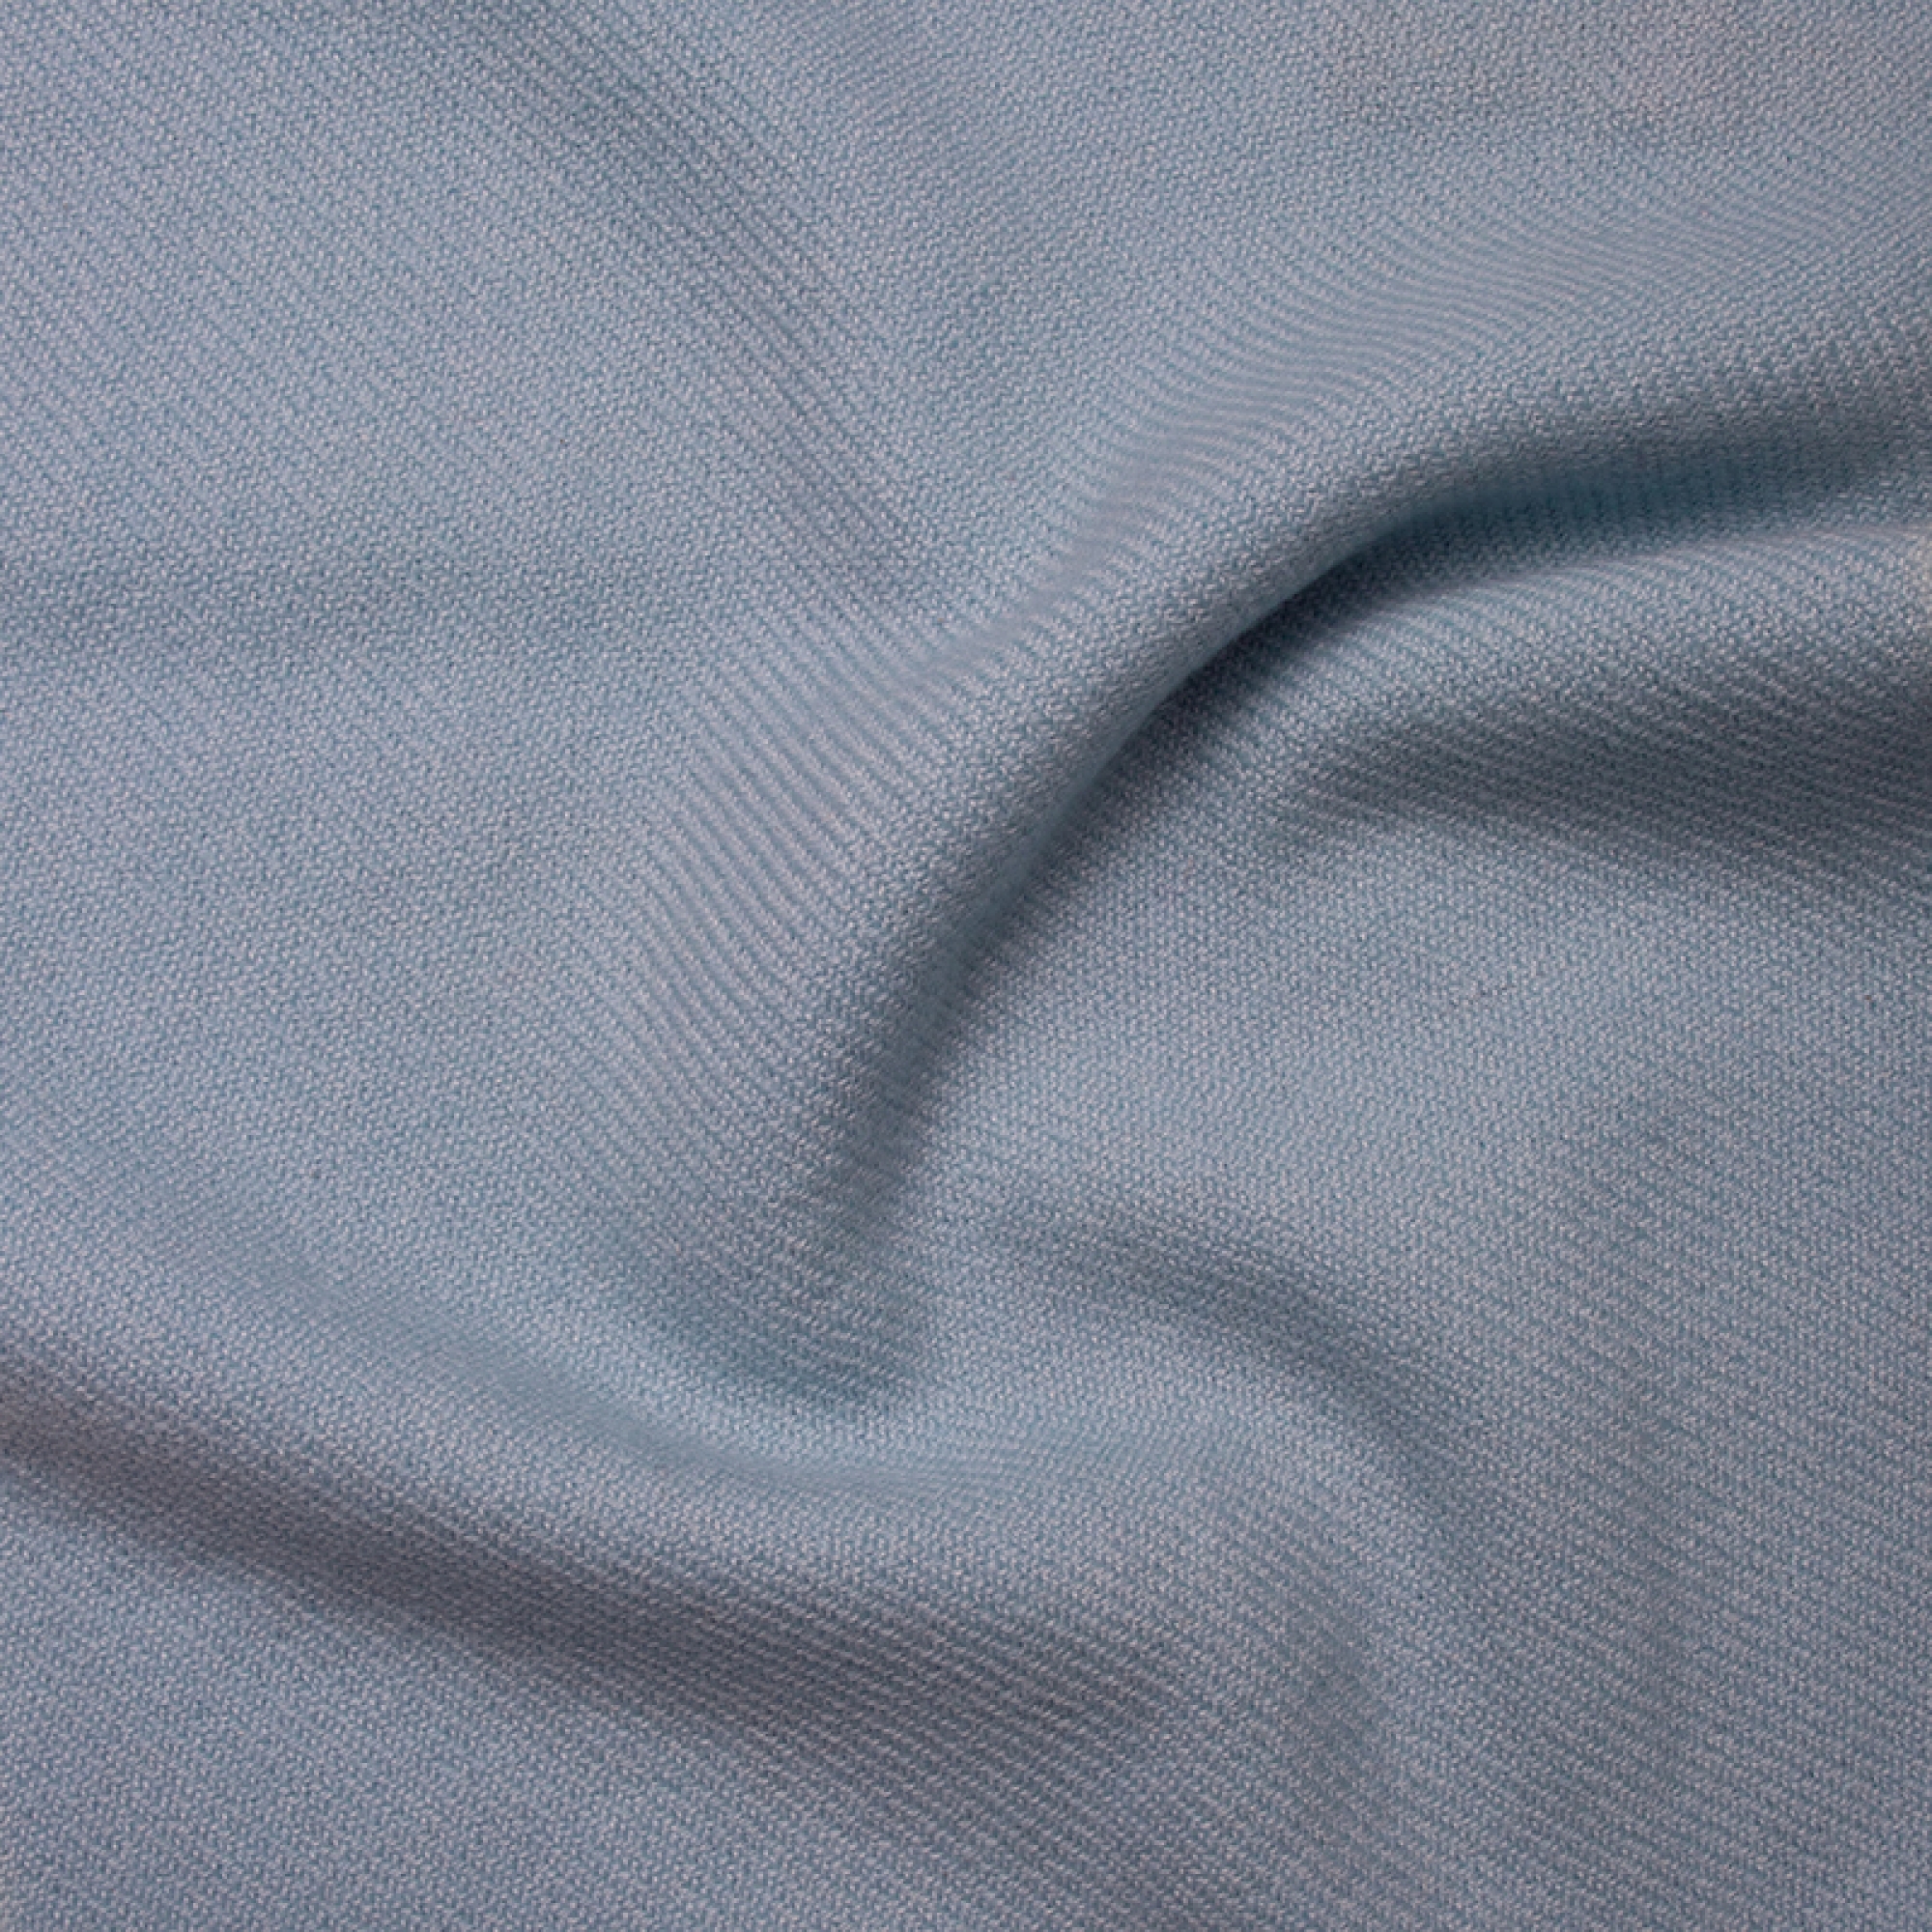 Cashmere accessoires neu toodoo plain xl 240 x 260 blauer himmel 240 x 260 cm